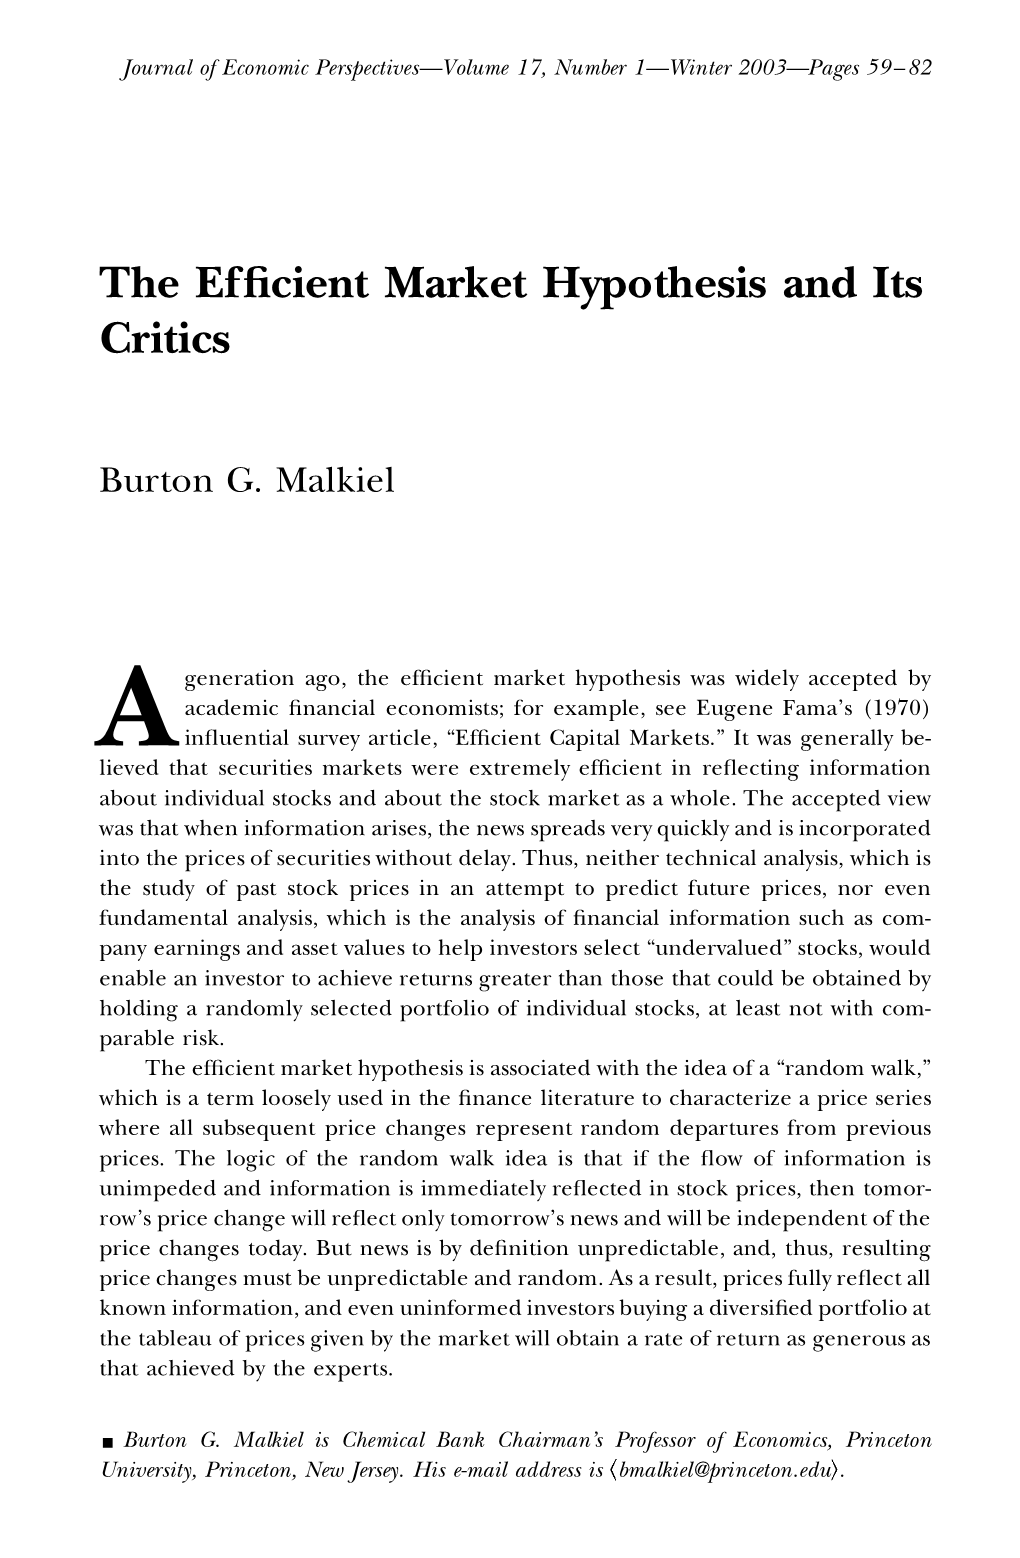 The Efficient Market Hypothesis and Its Critics